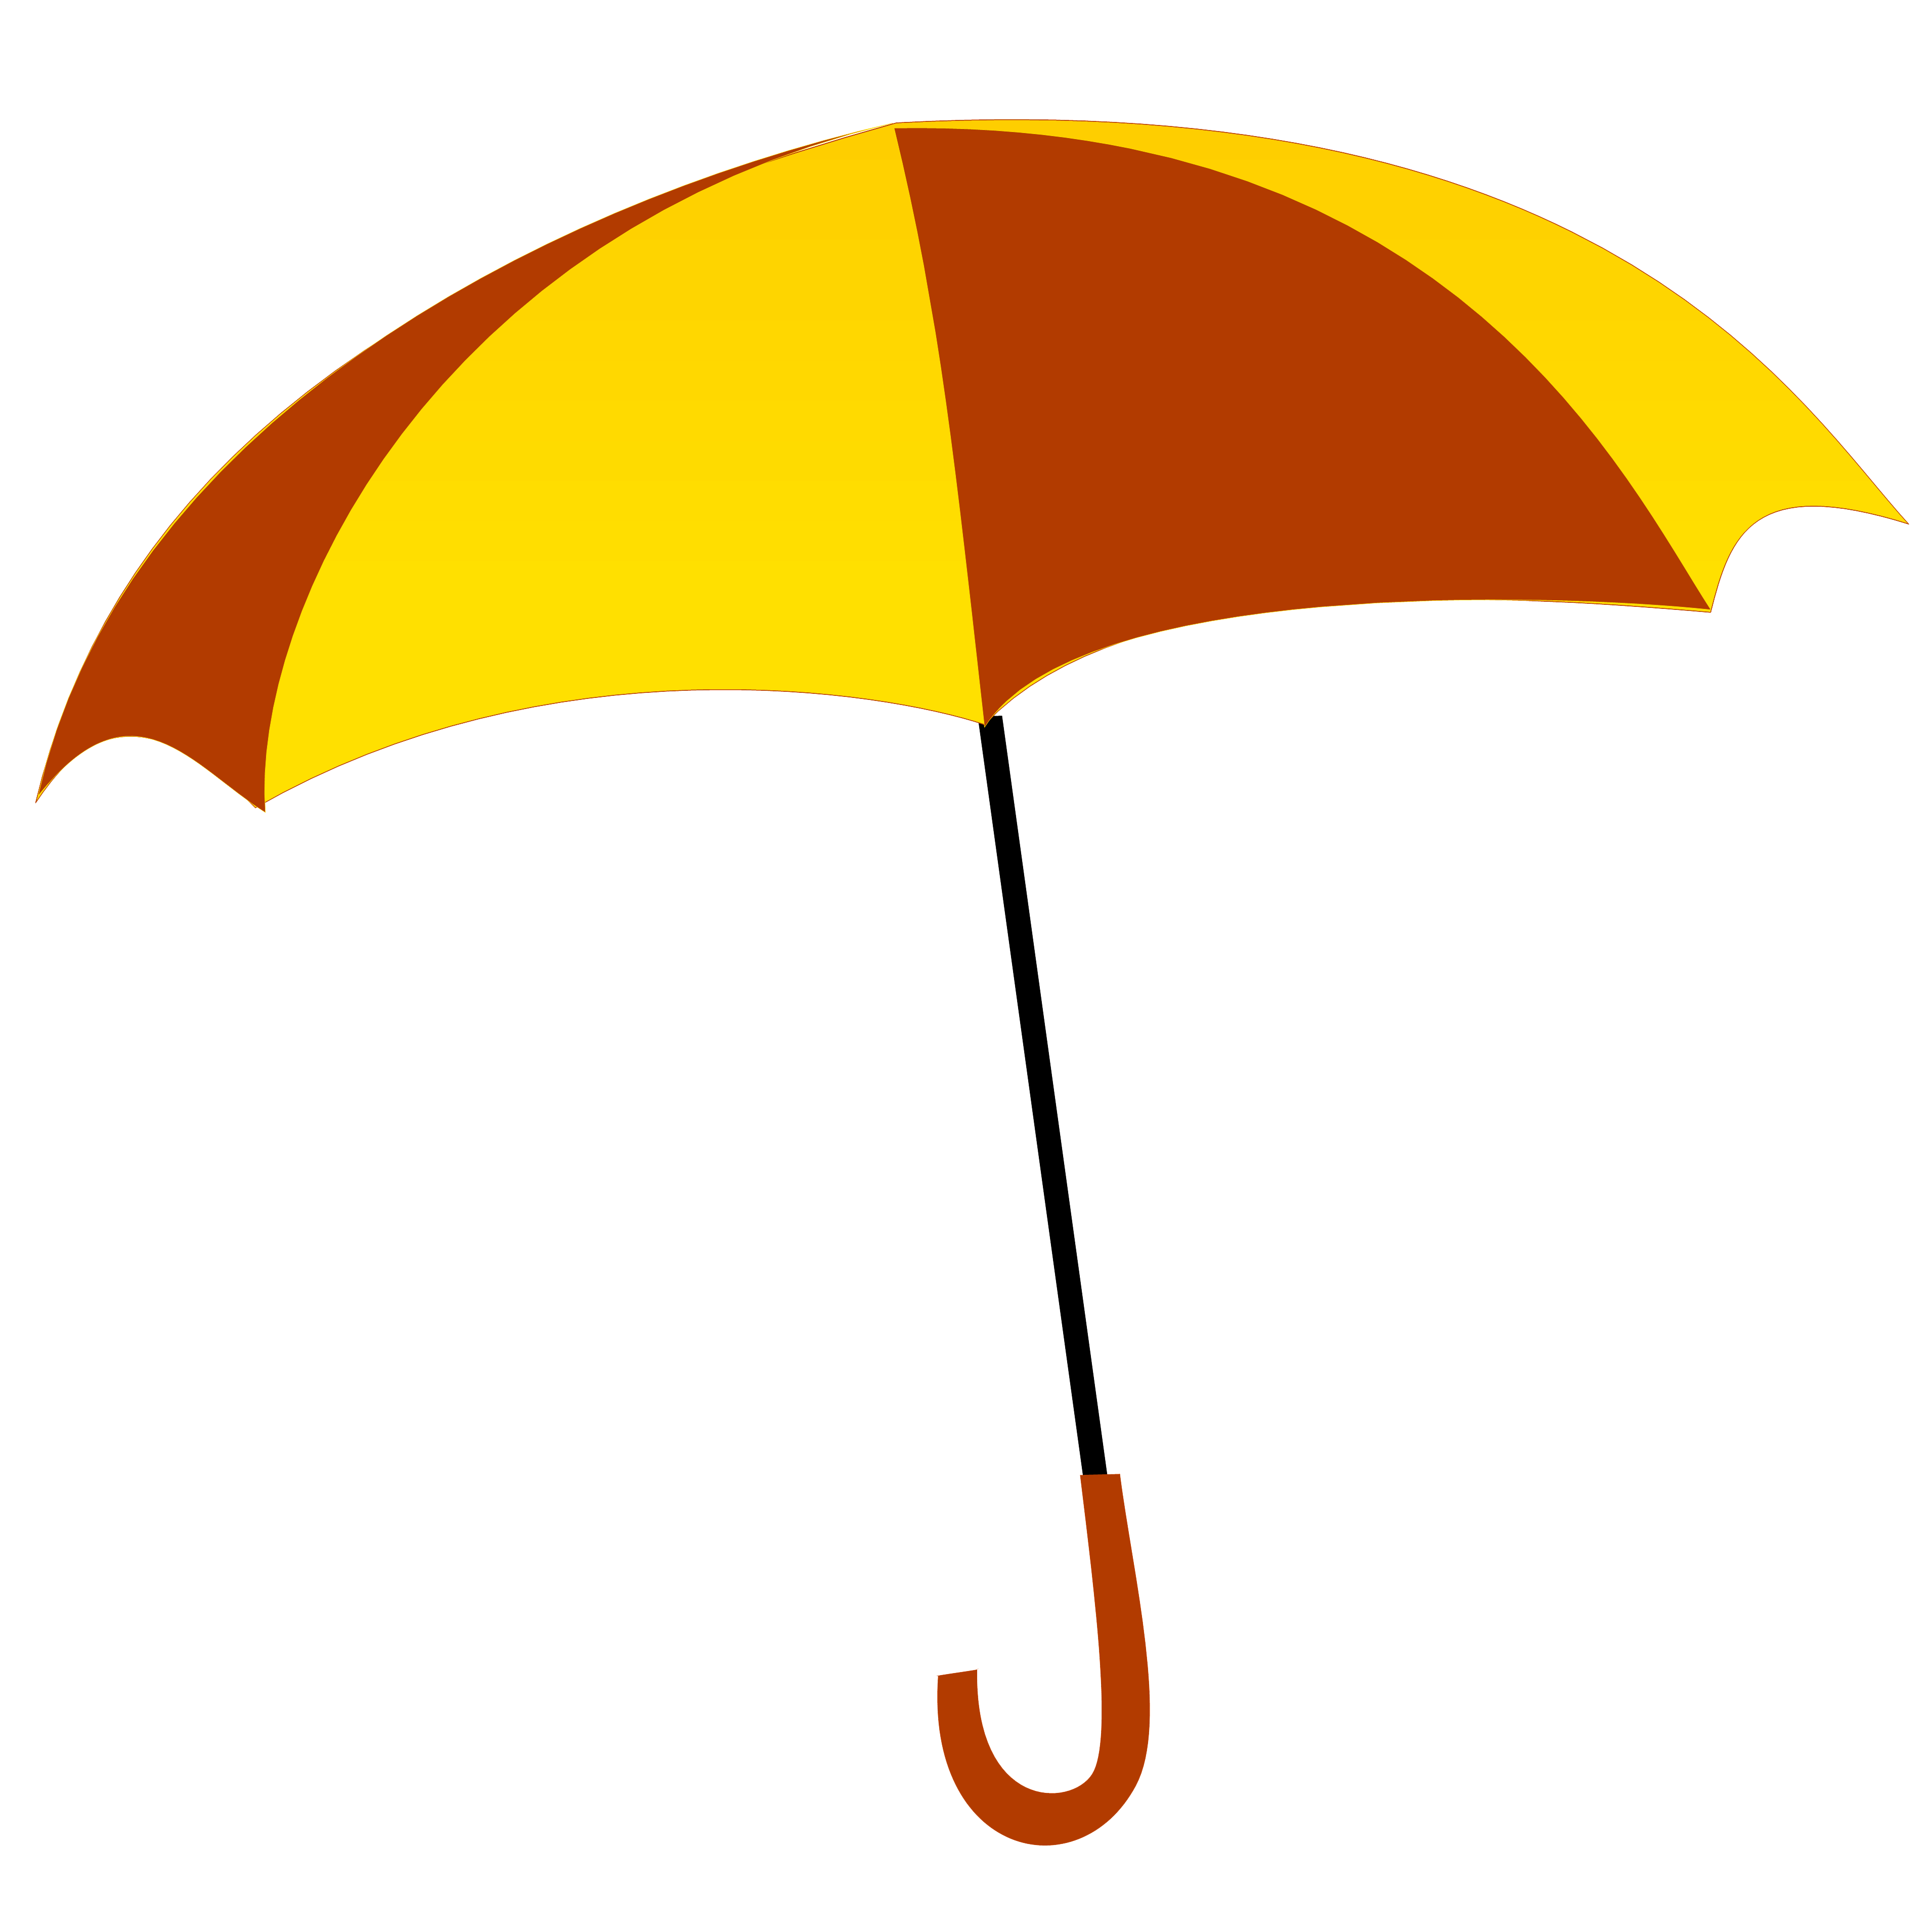 A Yellow And Orange Umbrella